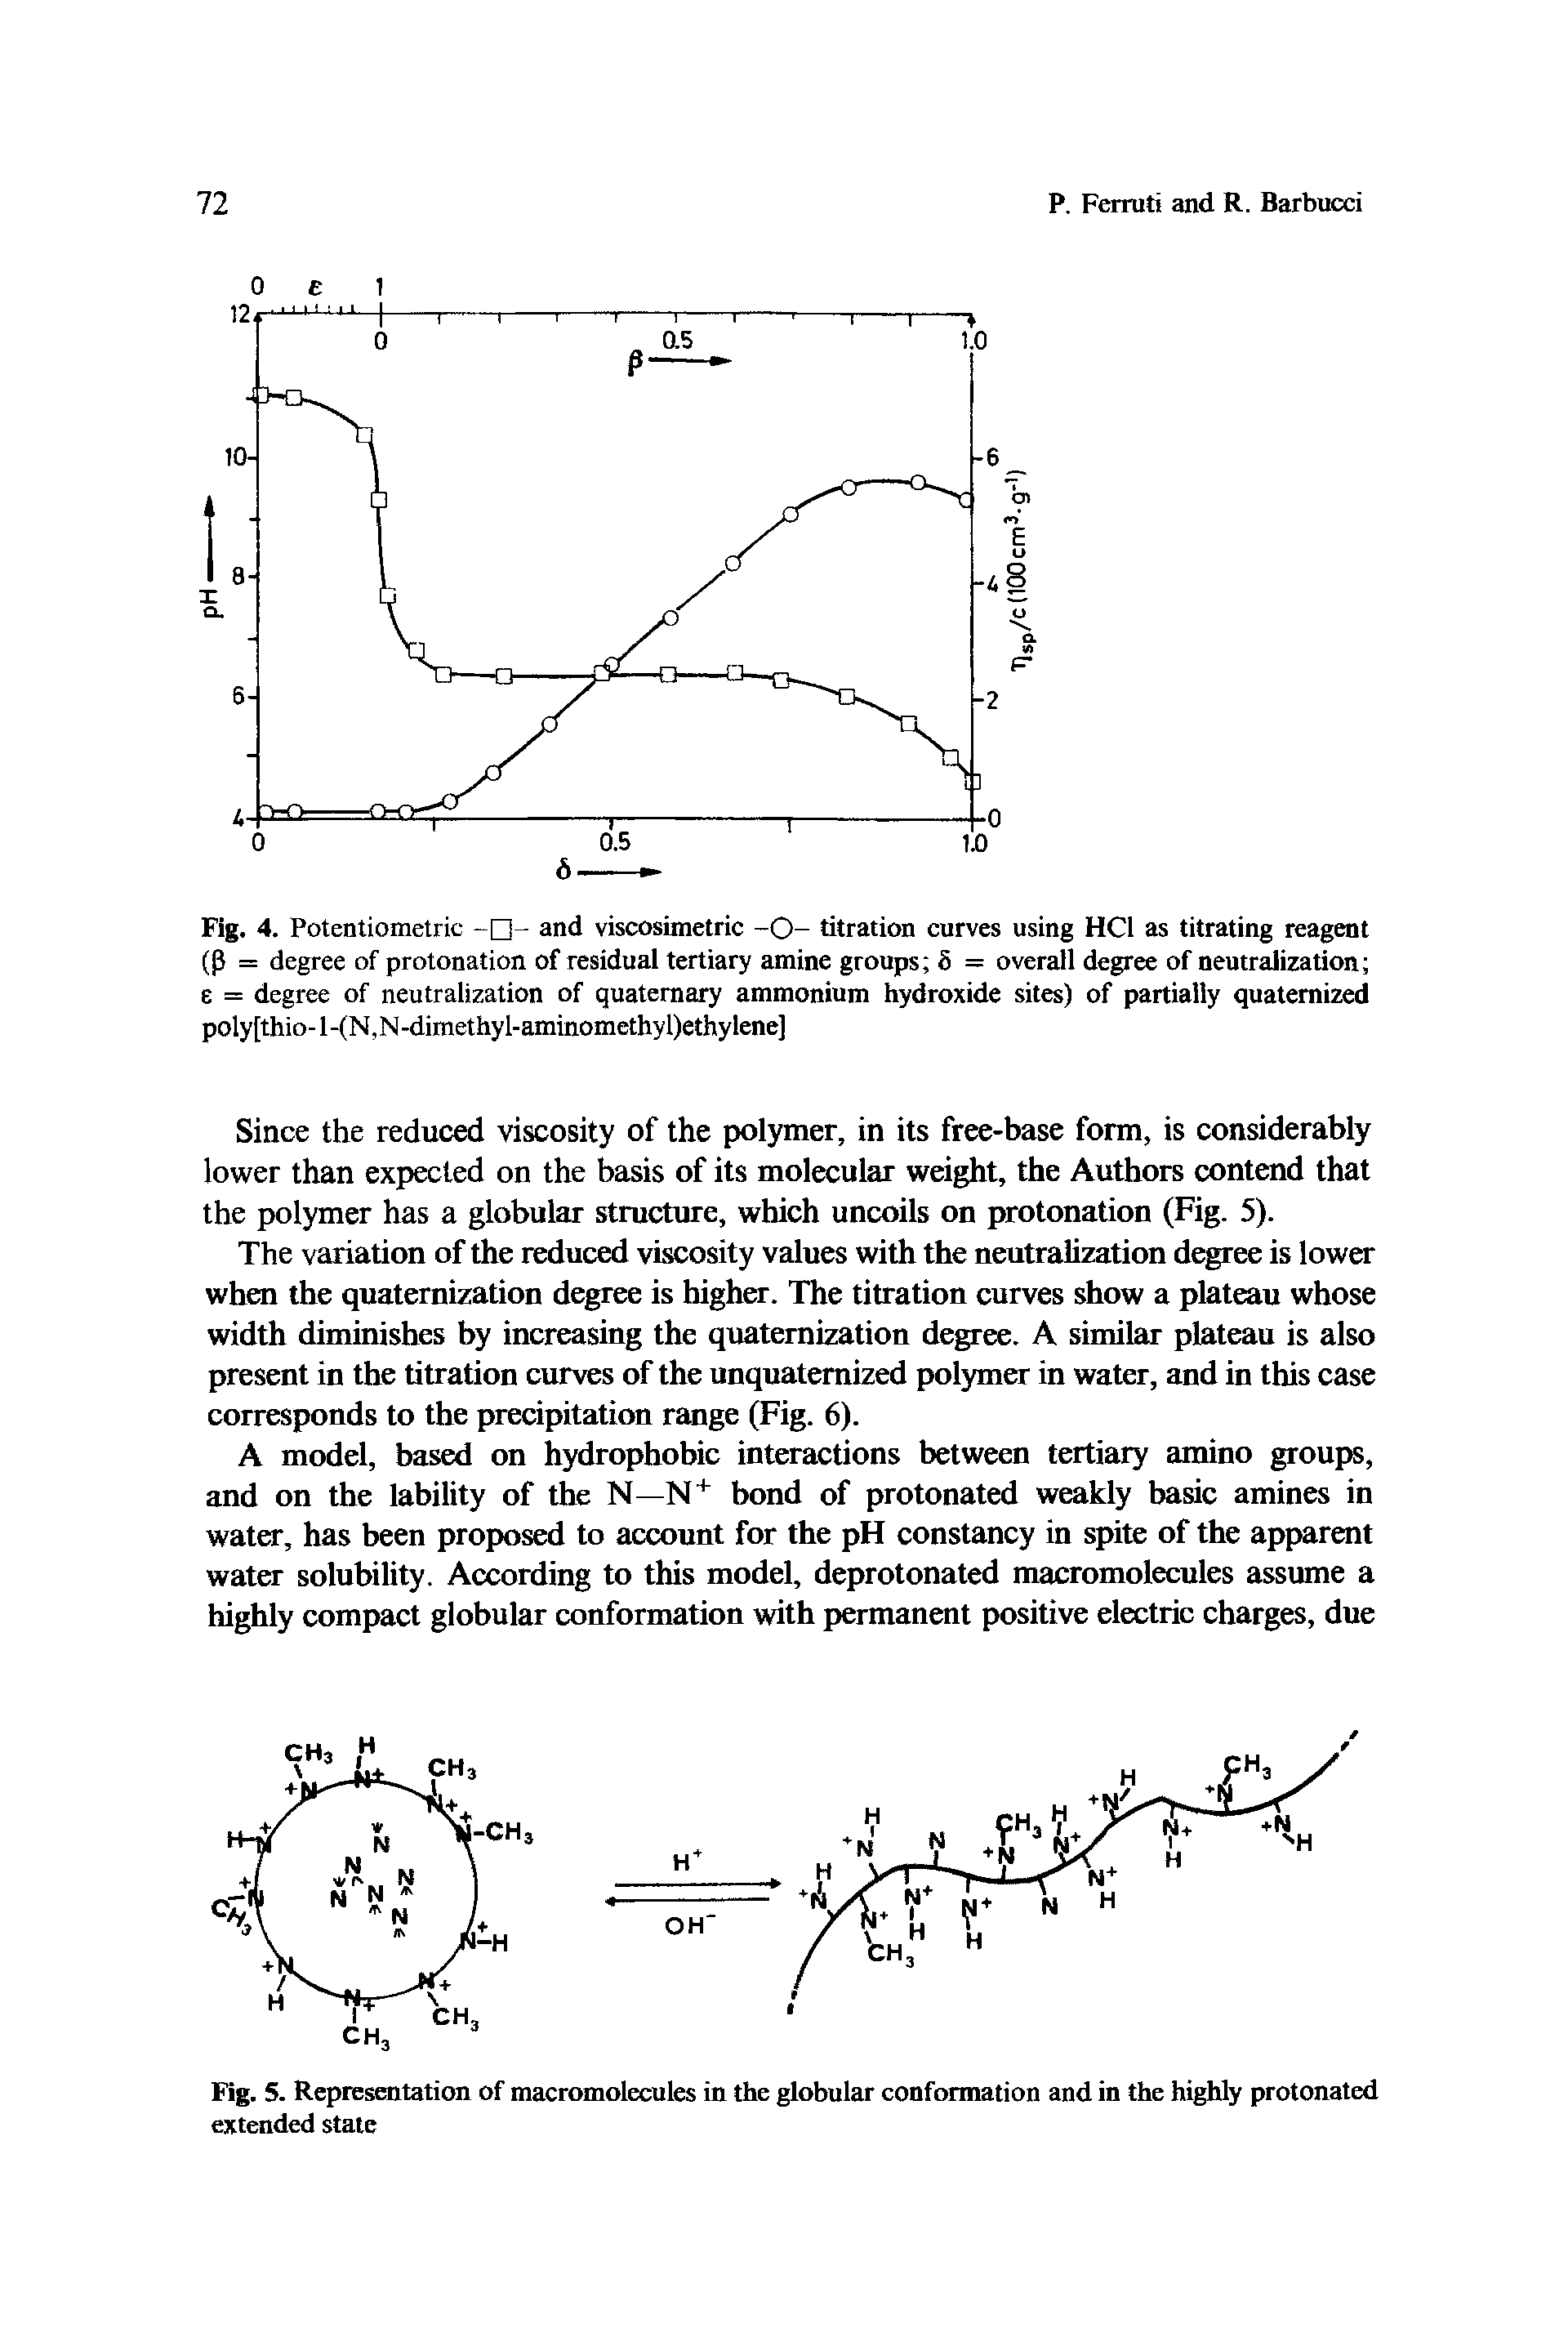 Fig. 4. Potentiometric - - and viscosimetric -O- titration curves using HC1 as titrating reagent ( 3 = degree of protonation of residual tertiary amine groups 5 = overall degree of neutralization e = degree of neutralization of quaternary ammonium hydroxide sites) of partially quatemized poly[thio-l-(N,N-dimethyl-aminomethyl)ethylene]...